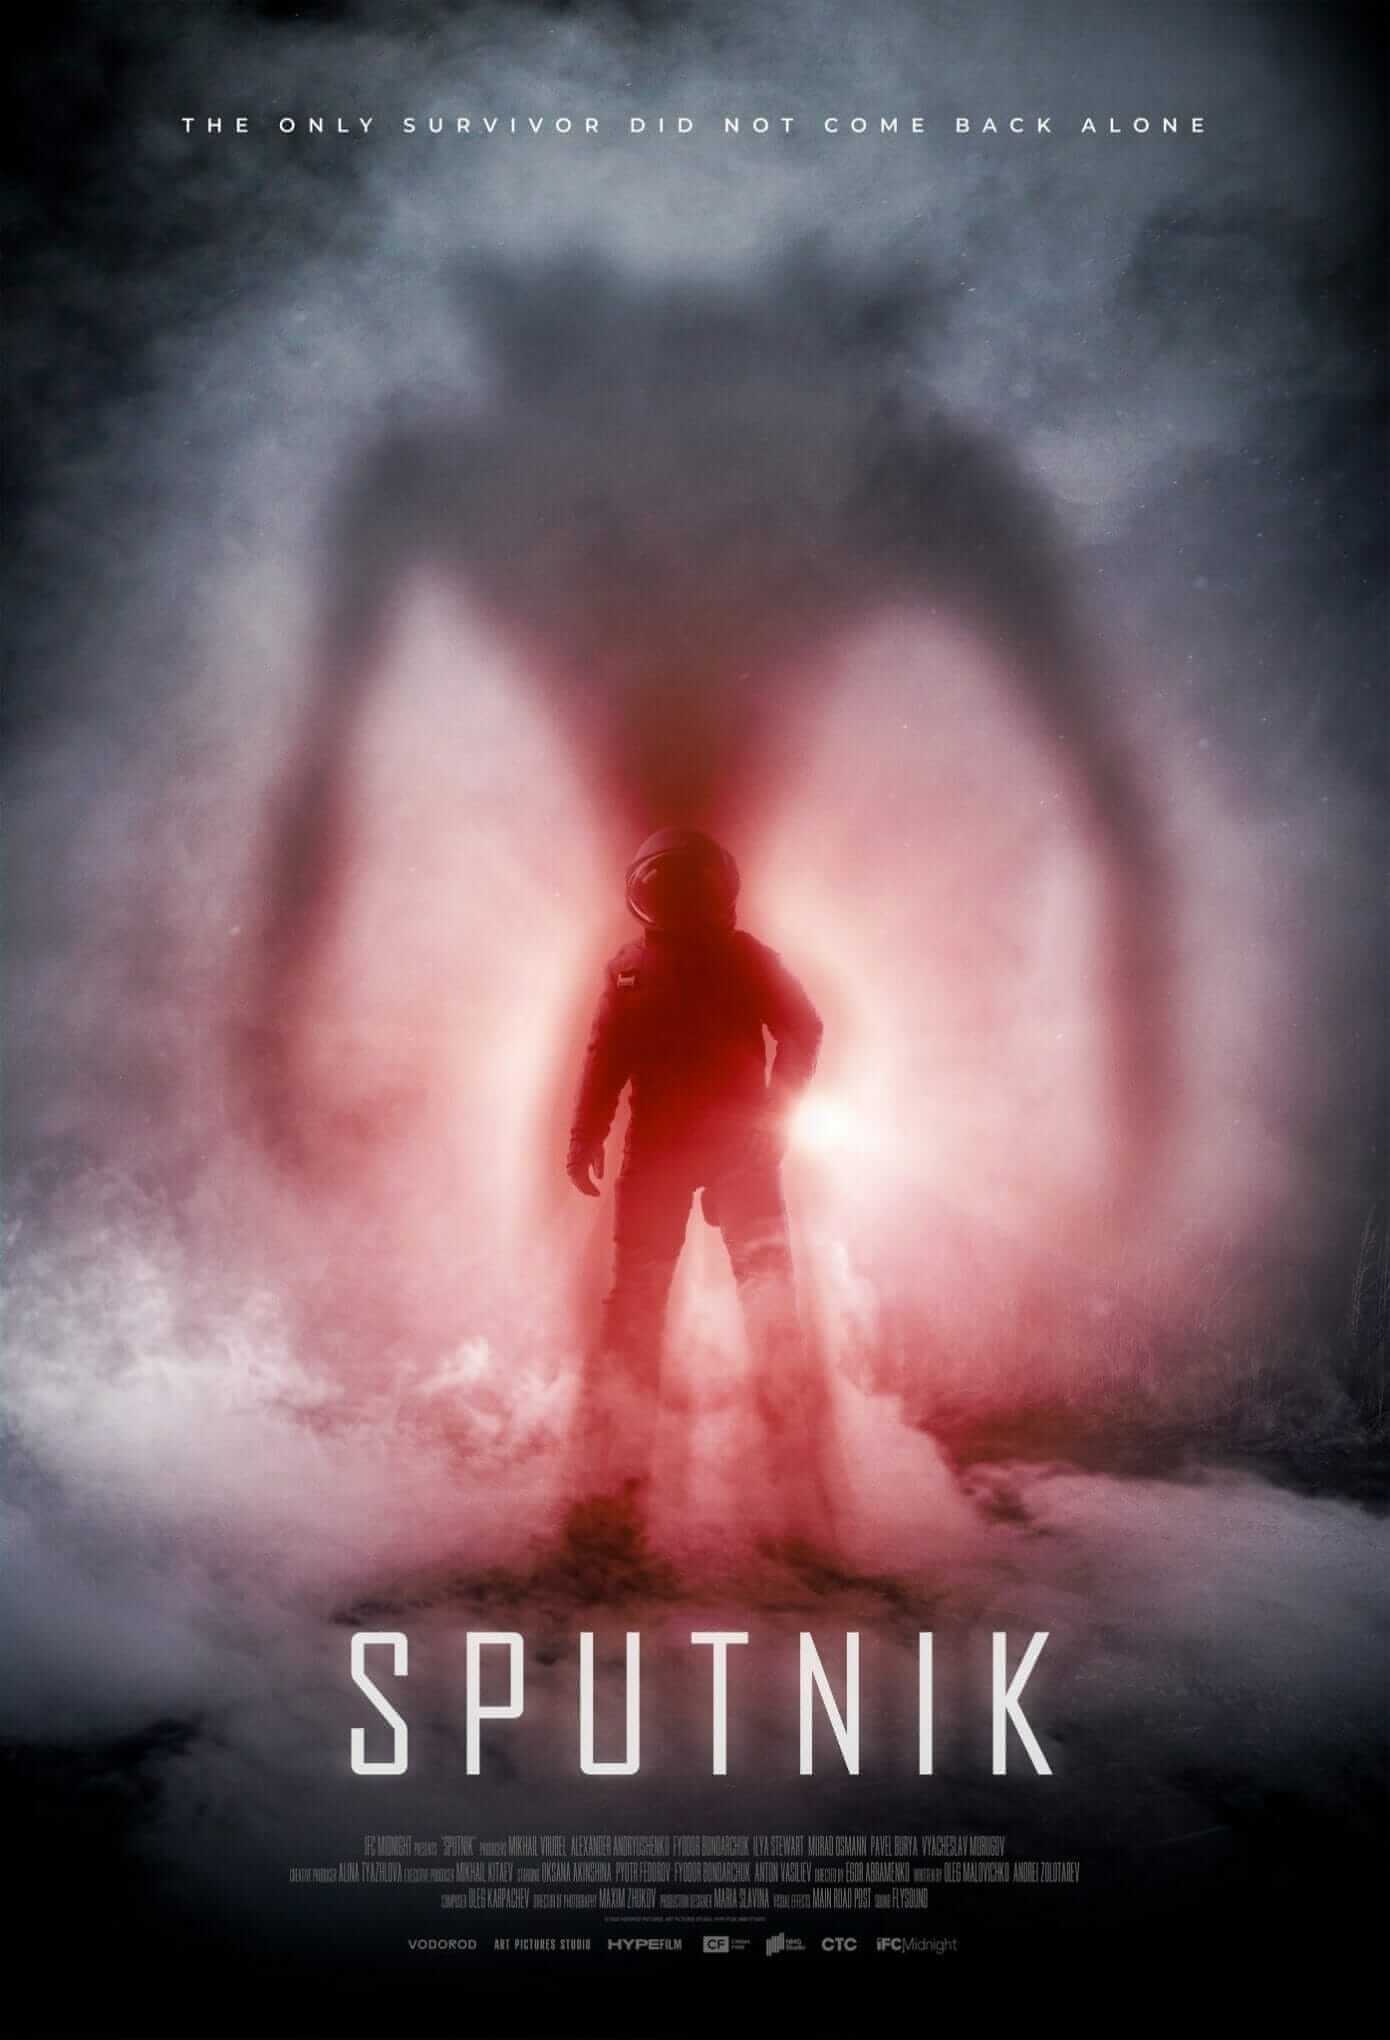 Sputnik Poster 2020 Horror Sci Fi Scaled